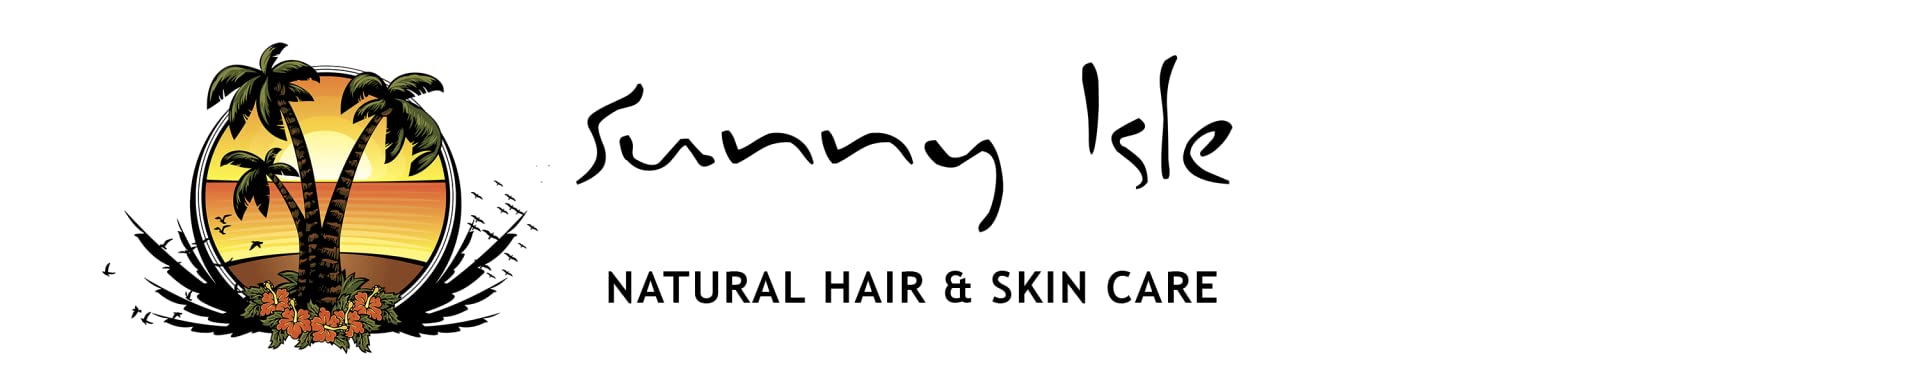 sunny isle natural hair and skin care